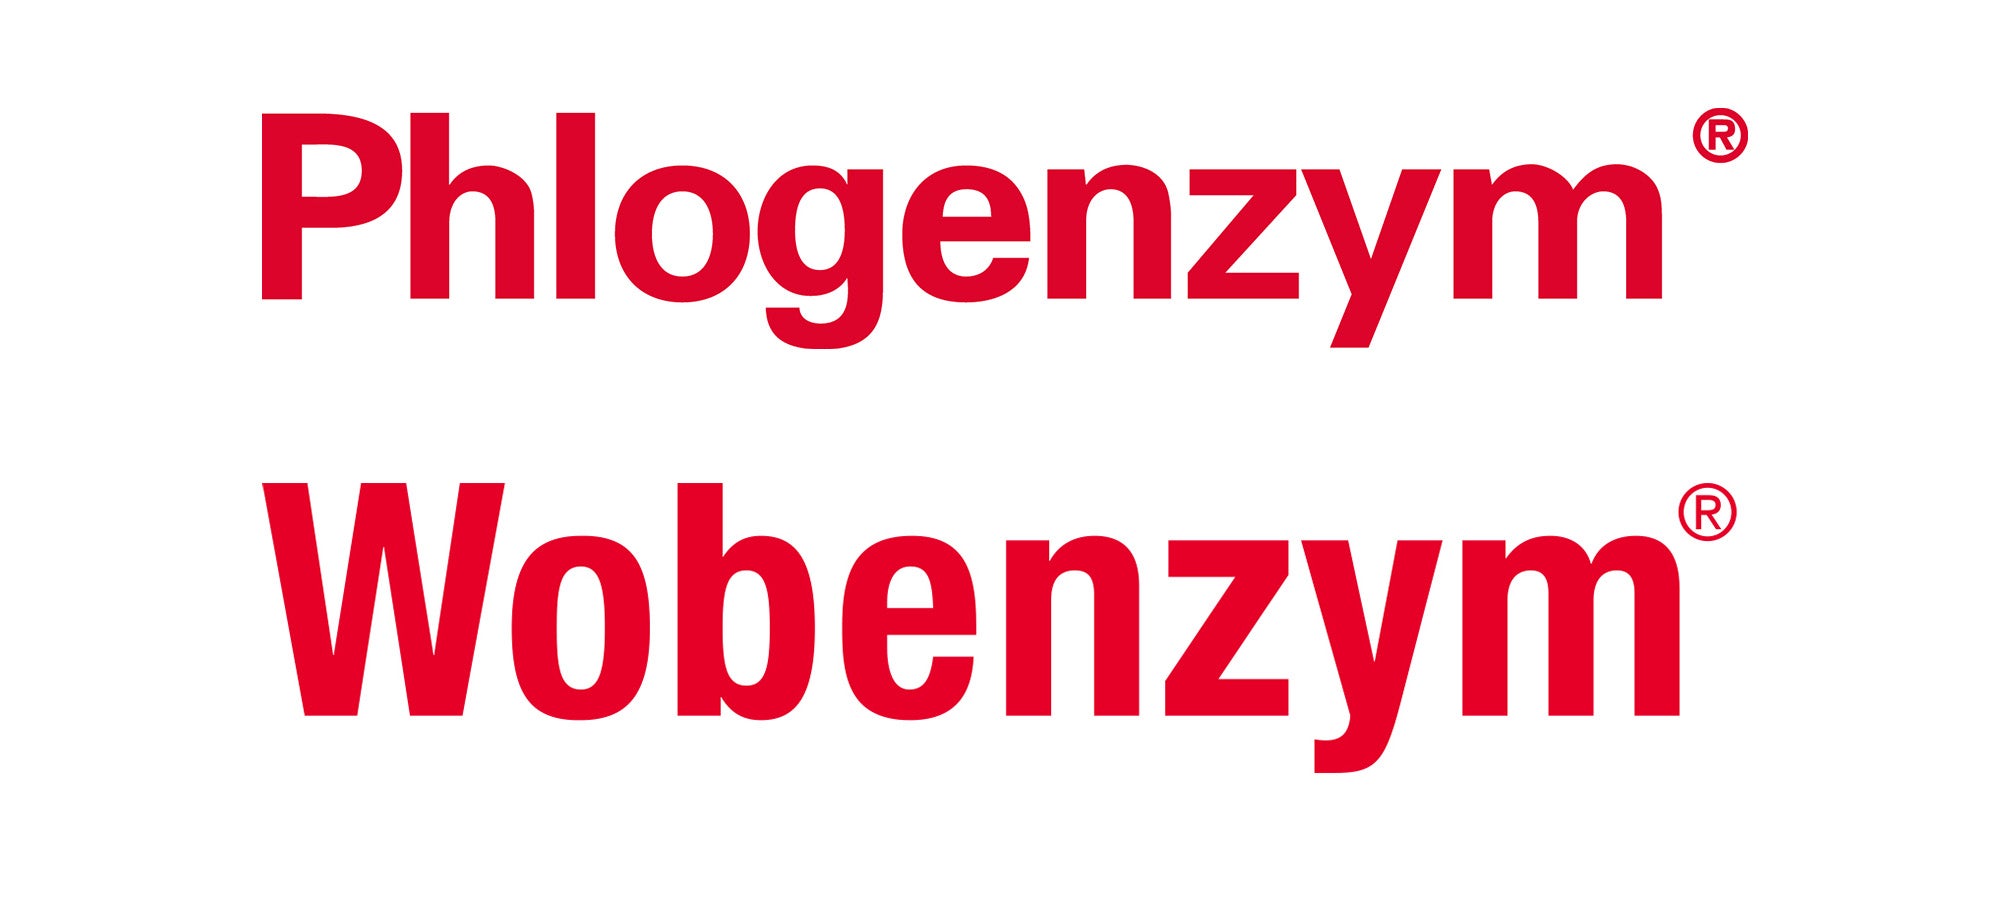 Wobenzym and Phlogenzym logo